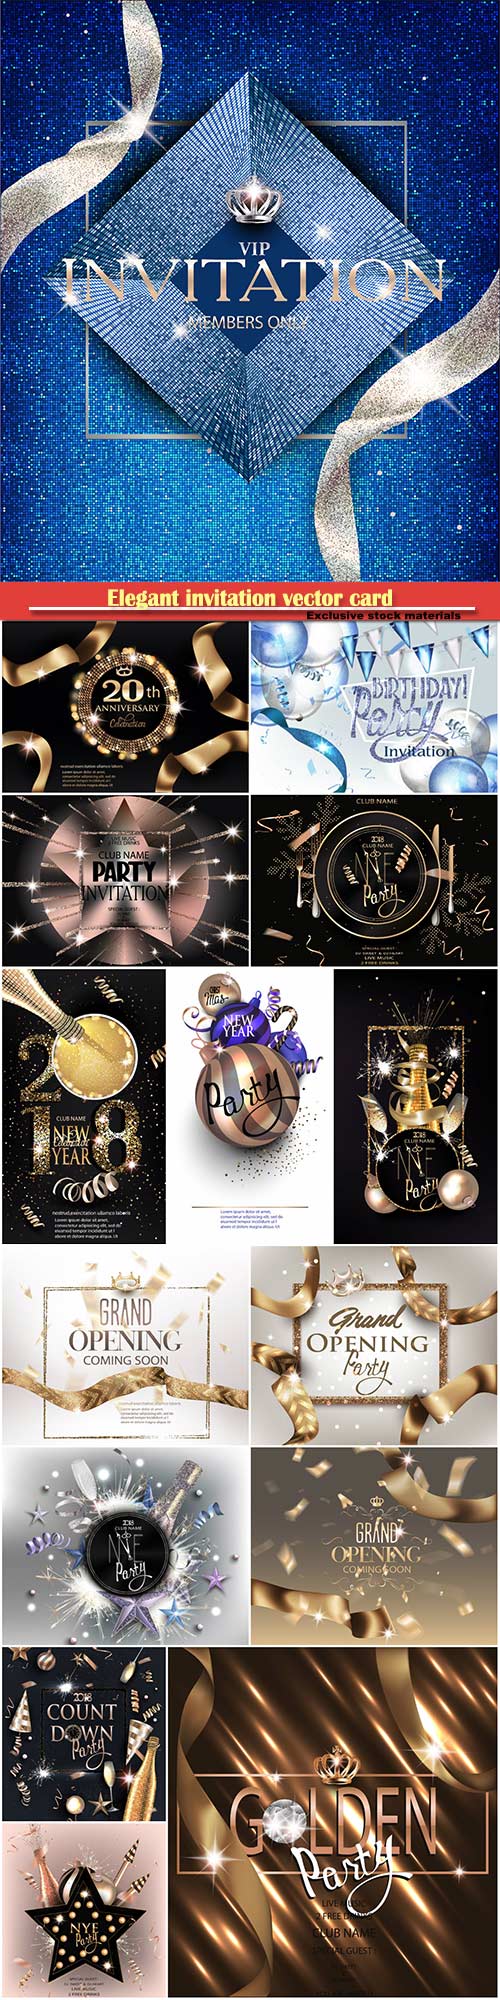 Elegant invitation vector card with sparkling ribbons and vintage design elements